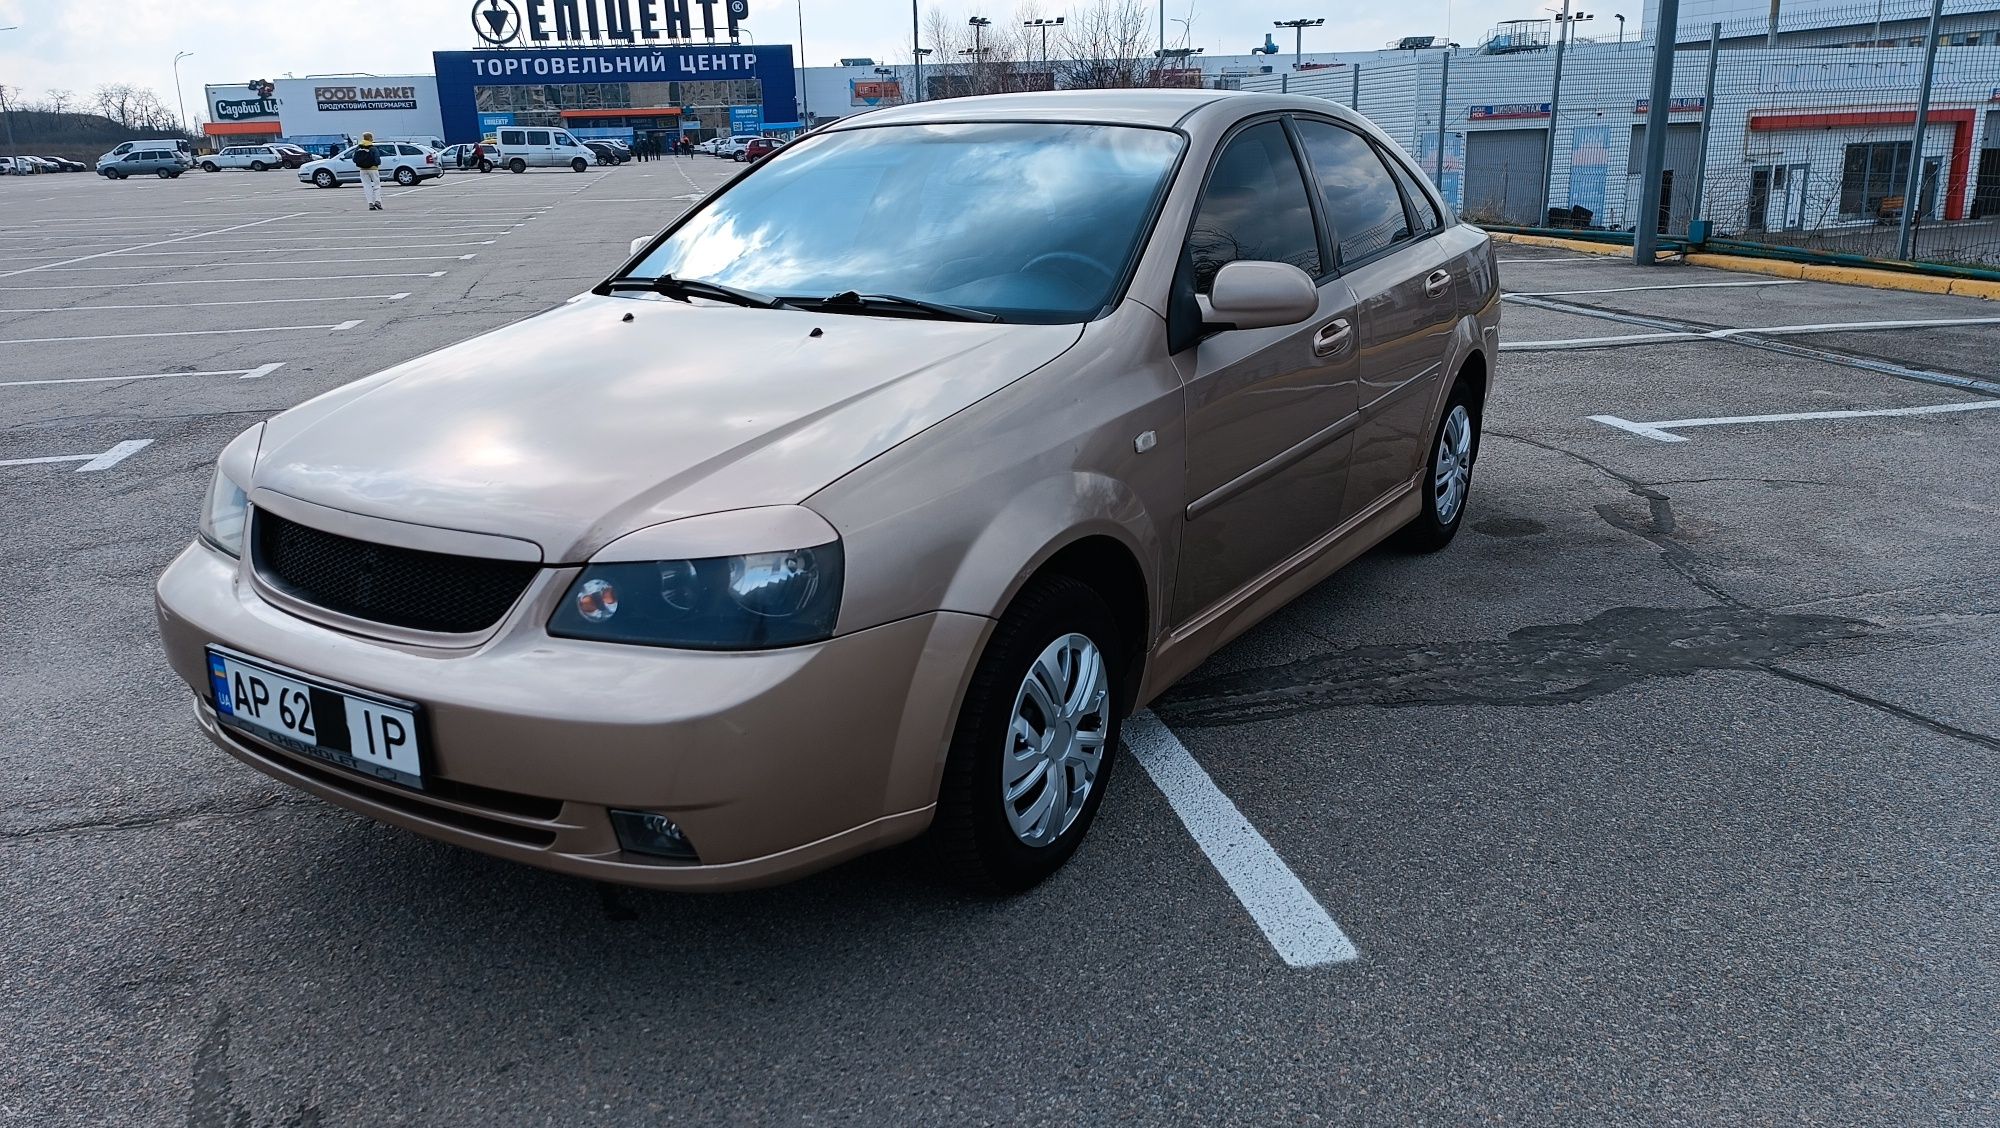 Chevrolet Lacetti cdx 1.8 2005 р